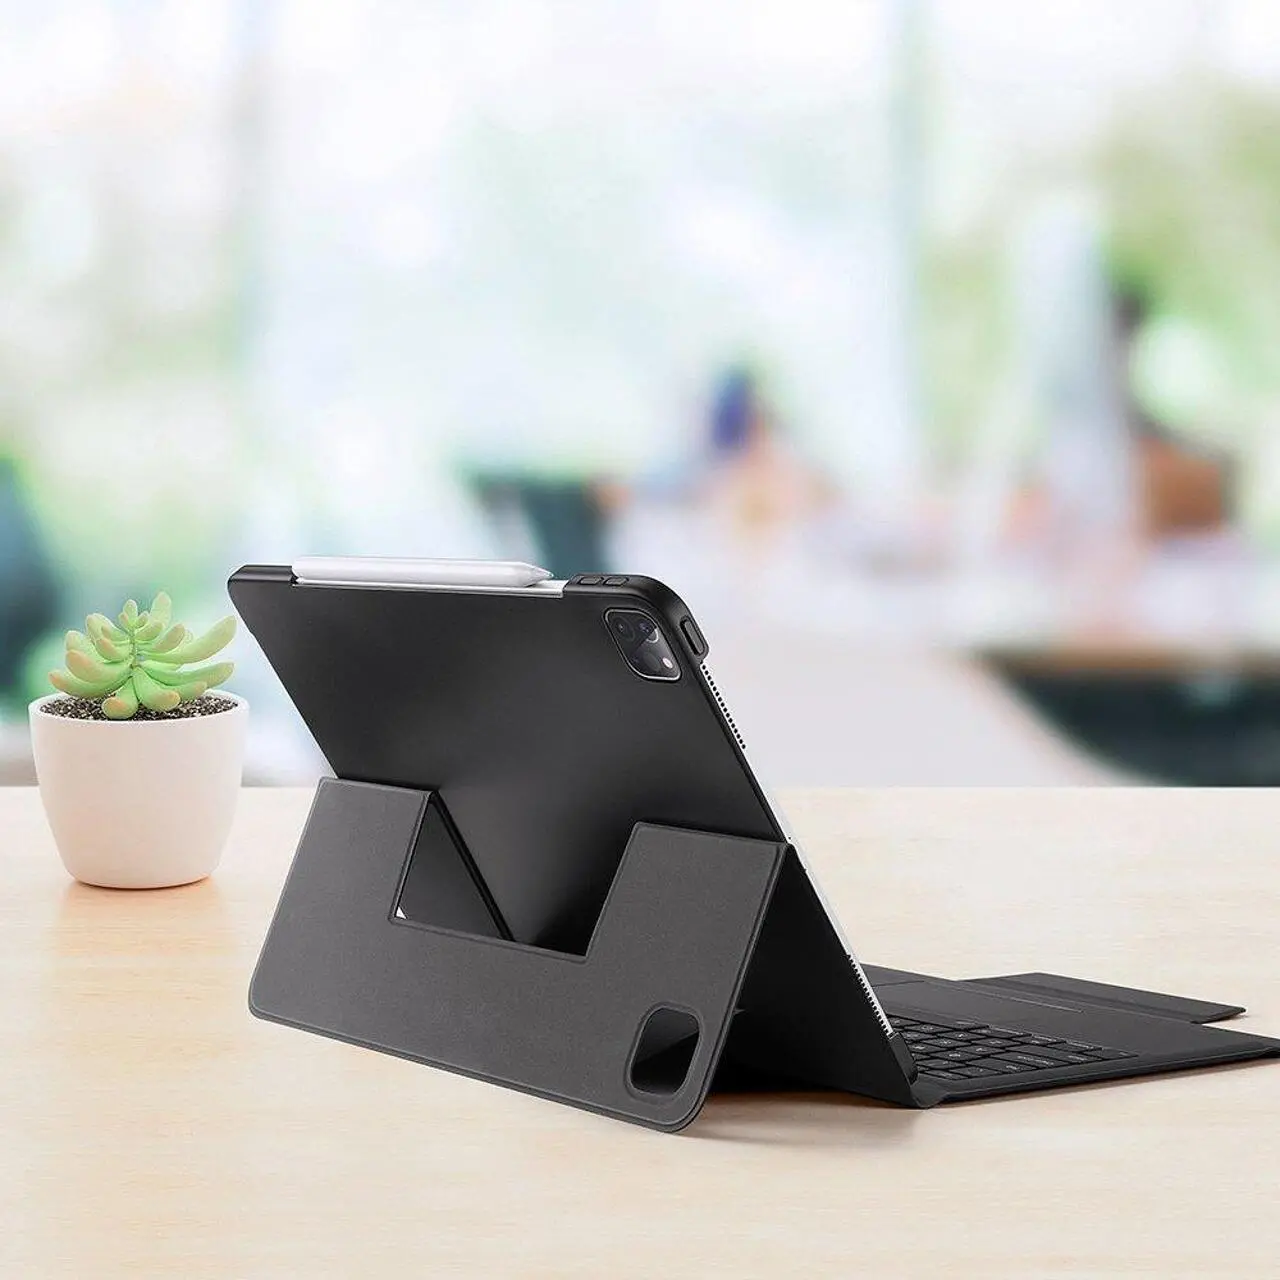 Калъф с клавиатура за iPad Pro 12.9 2021-2018, DUX DUCIS Touchpad Keyboard Case, Черен - image 1